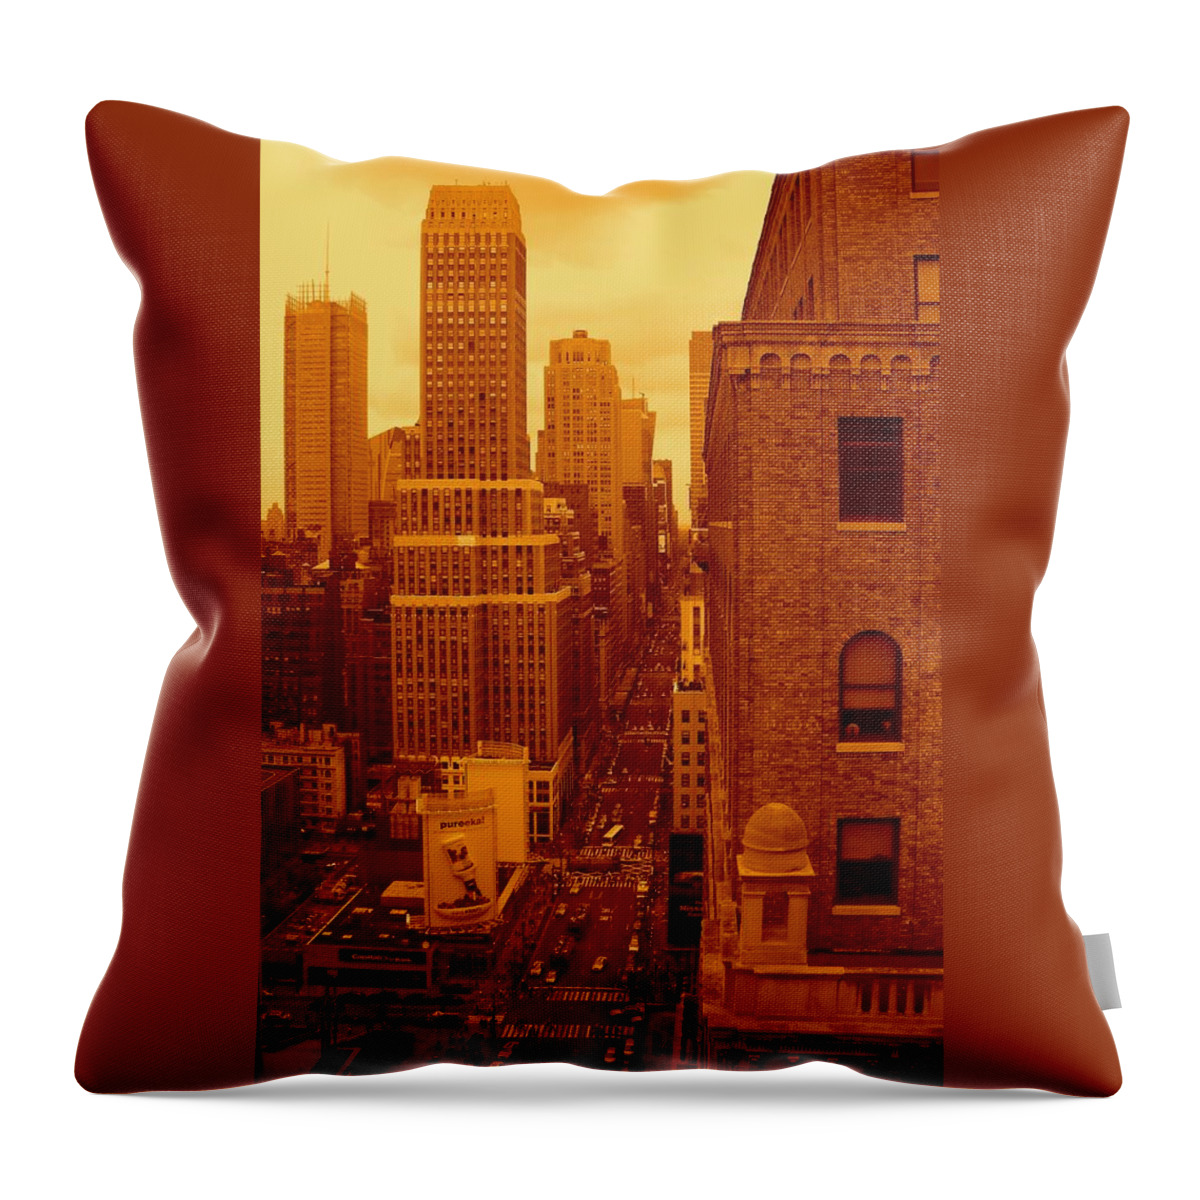 Manhattan Posters And Prints Throw Pillow featuring the photograph Top of Manhattan by Monique Wegmueller